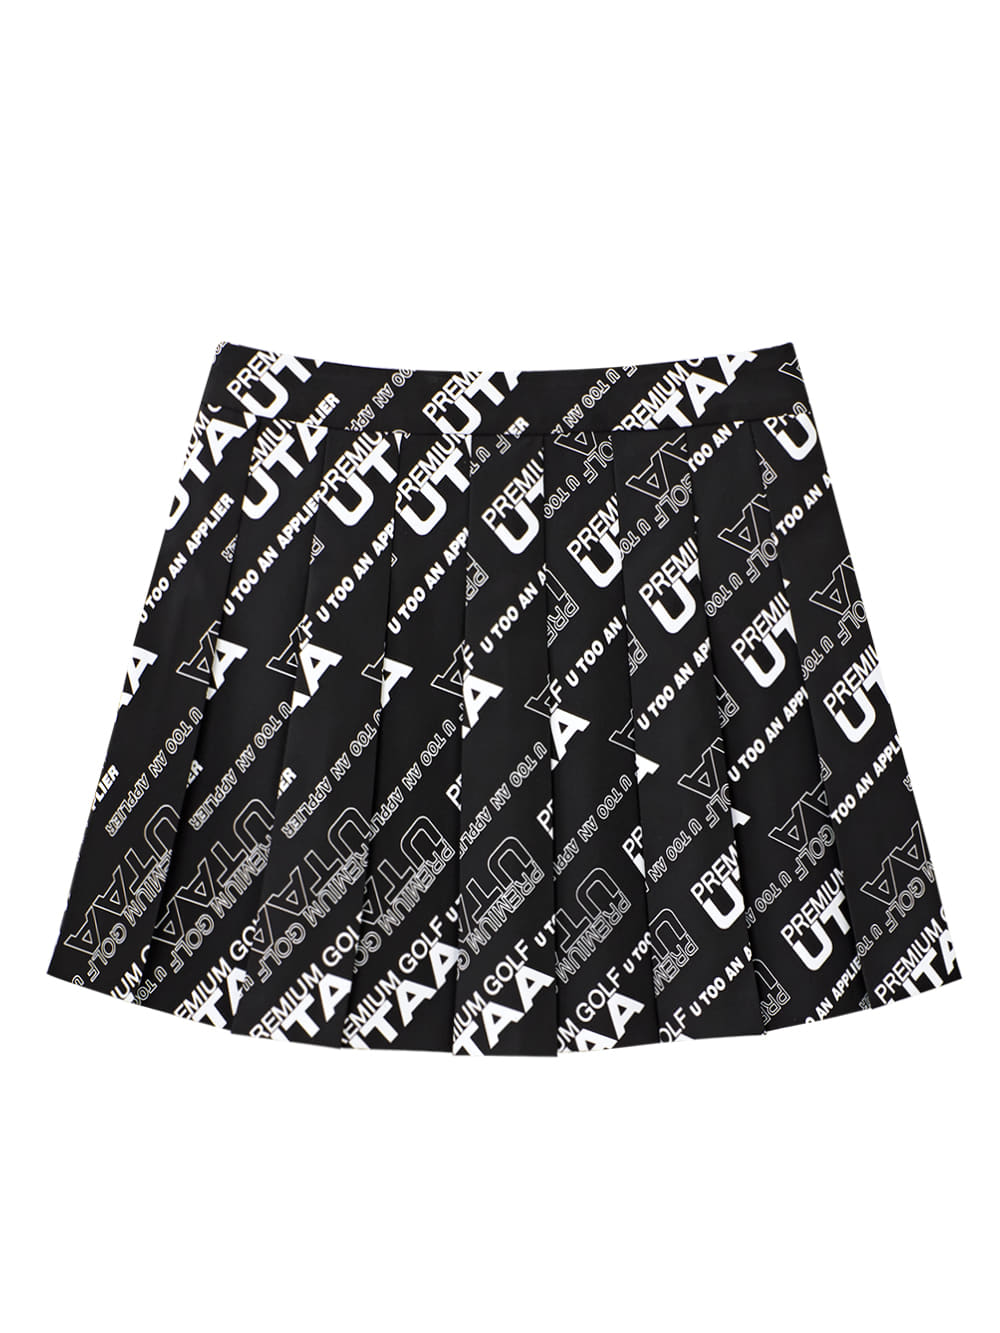 UTAA Logo Slogan Wave Pleats Skirt : Black (UB2SKF391BK)